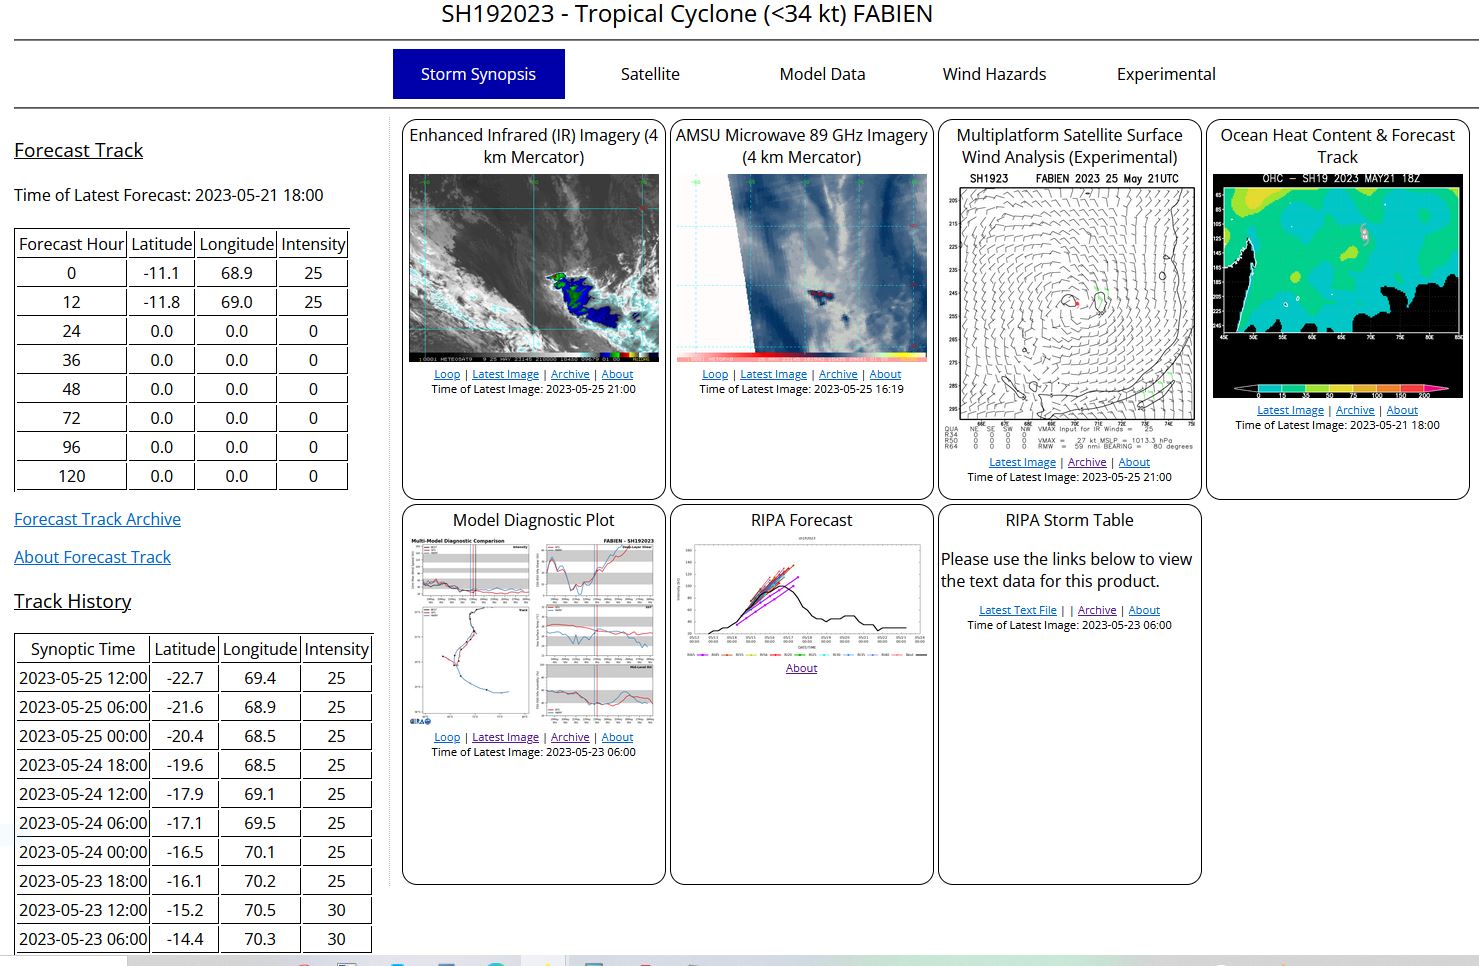 Impressive Super Typhoon 02W(MAWAR) is peaking at CAT 5 US over the Philippine Sea//Remnants of TC 19S(FABIEN)//2521utc